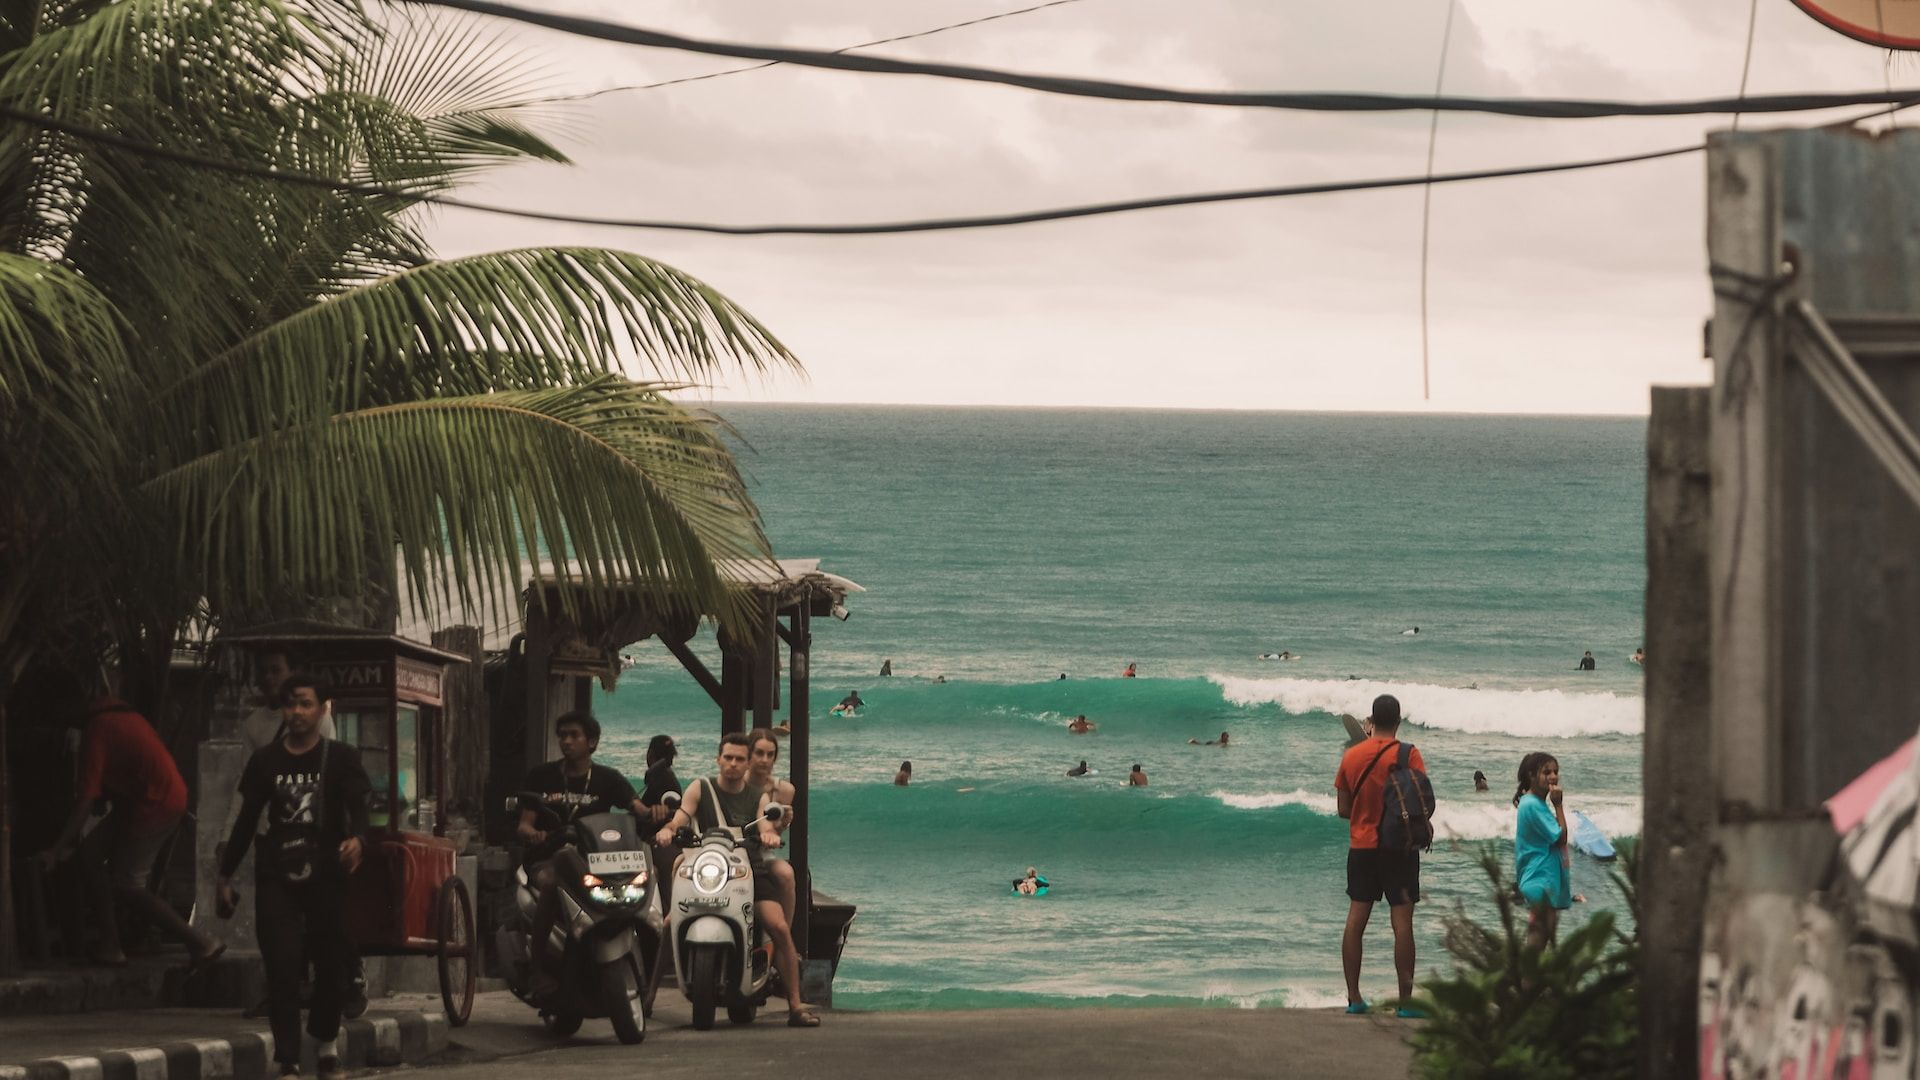 Motorbikes near the beach in Bali, Indonesia